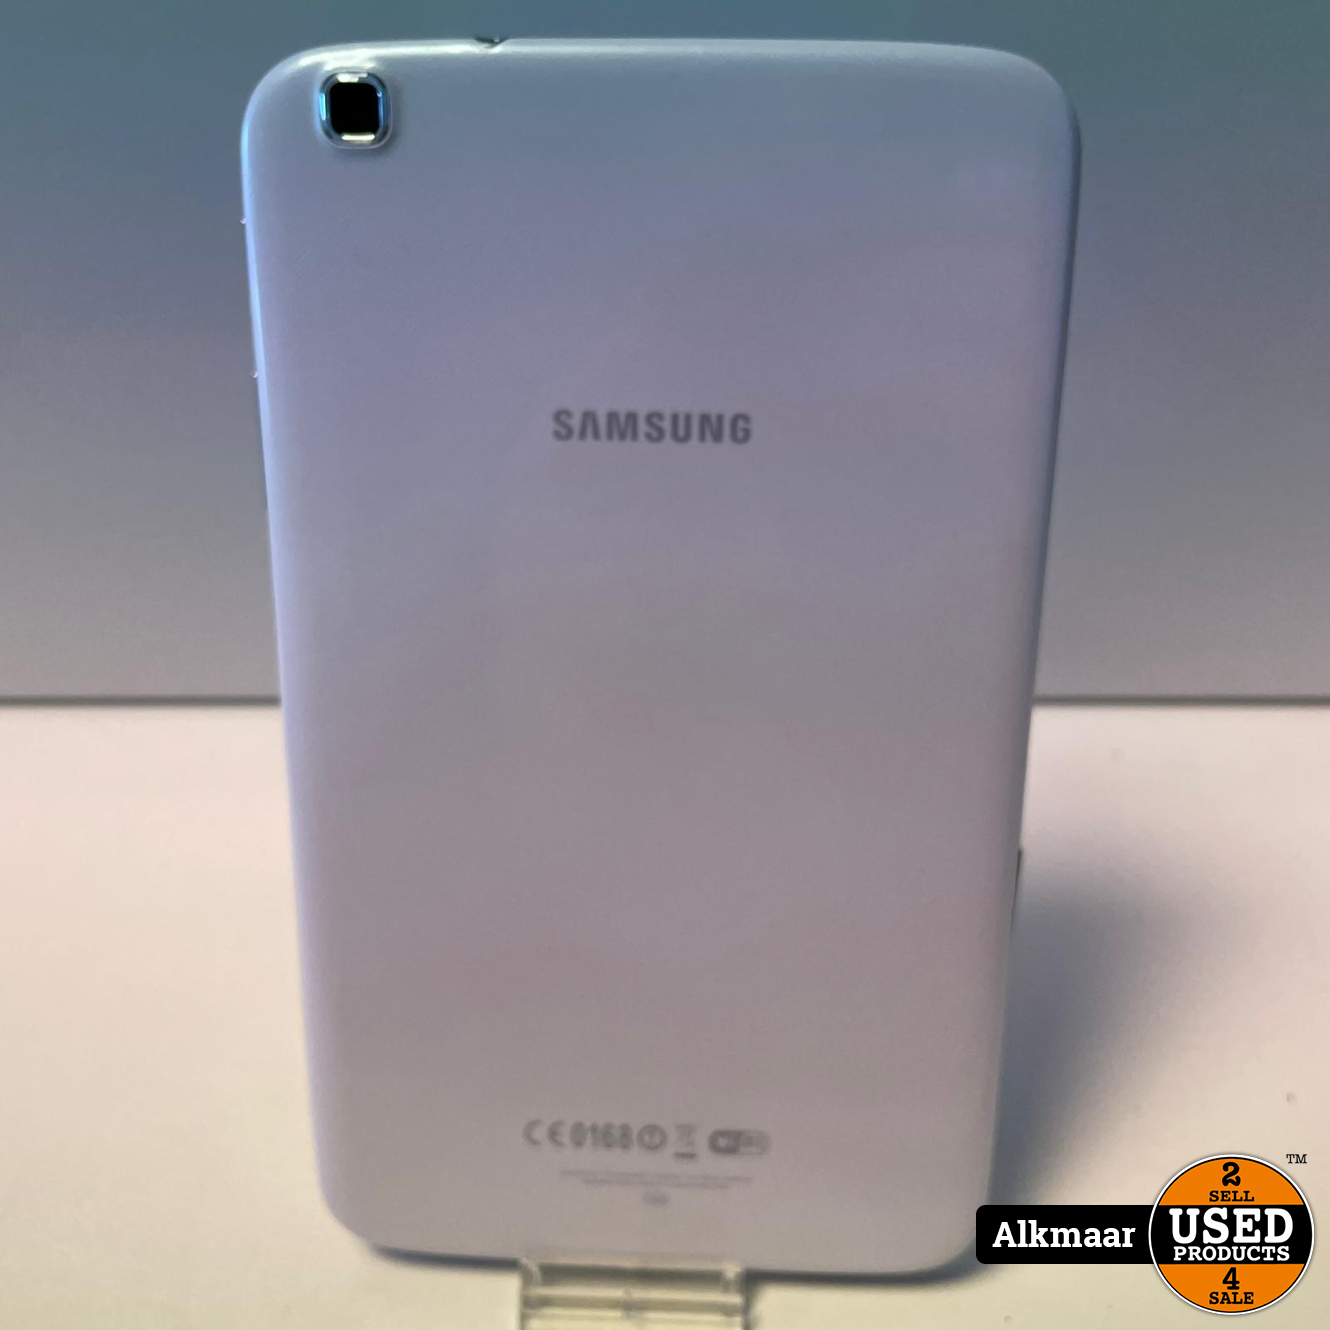 Raap Geduld compleet Samsung Galaxy Tab 3 16GB 8.0 inch wit - Used Products Alkmaar